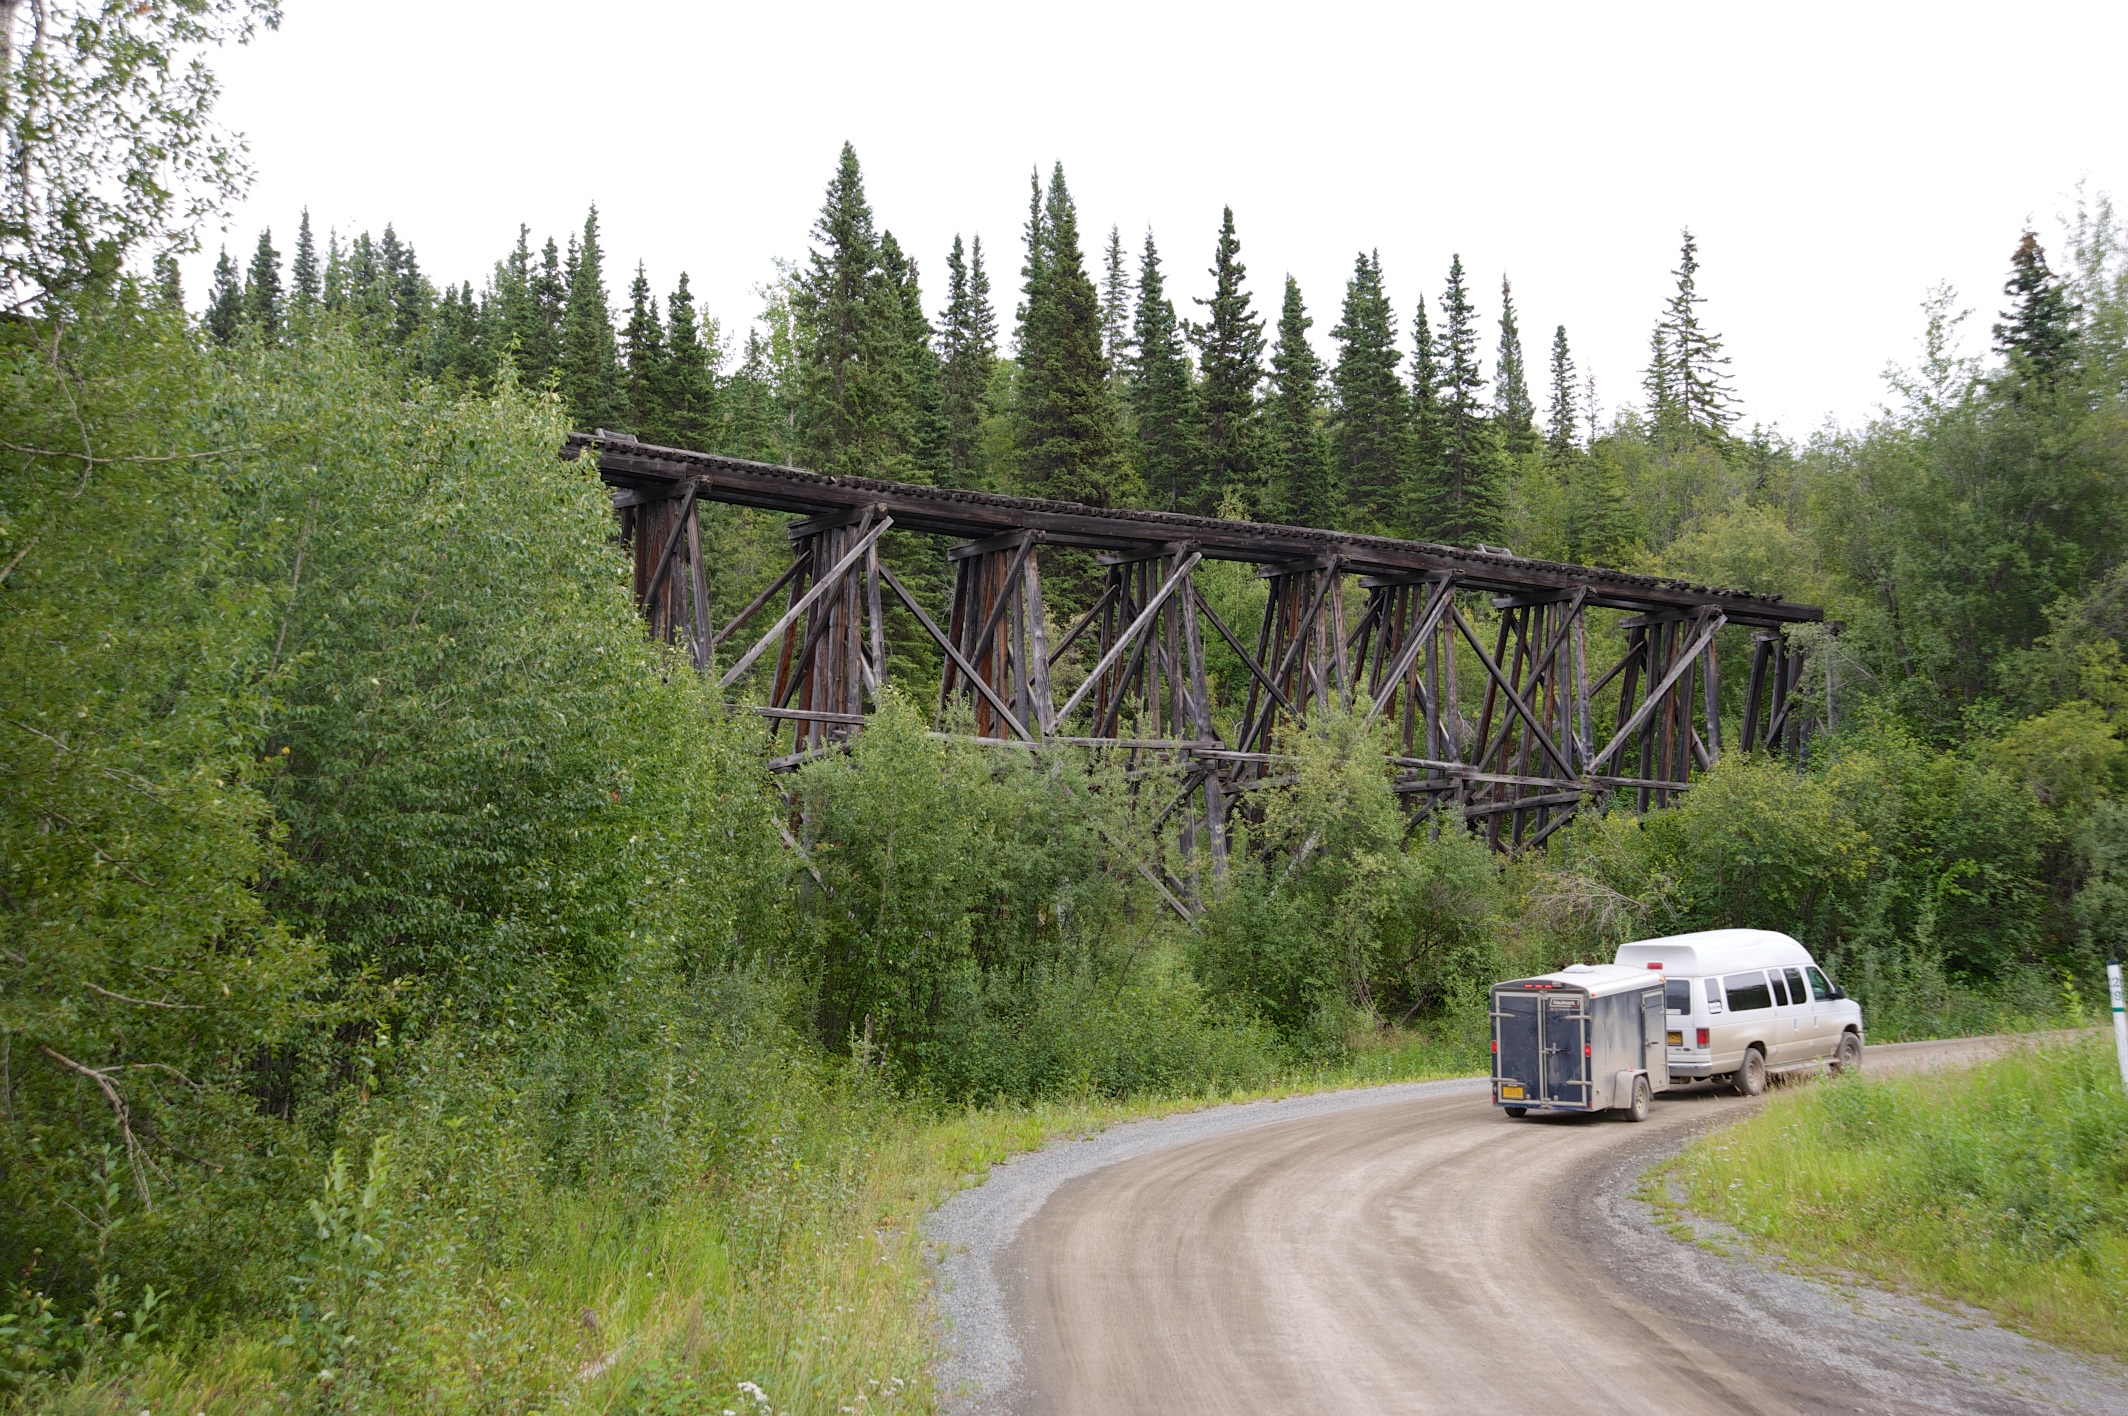  Our van at Railway bridge over Gilahina R, Wrangell St Elias NP, Alaska 